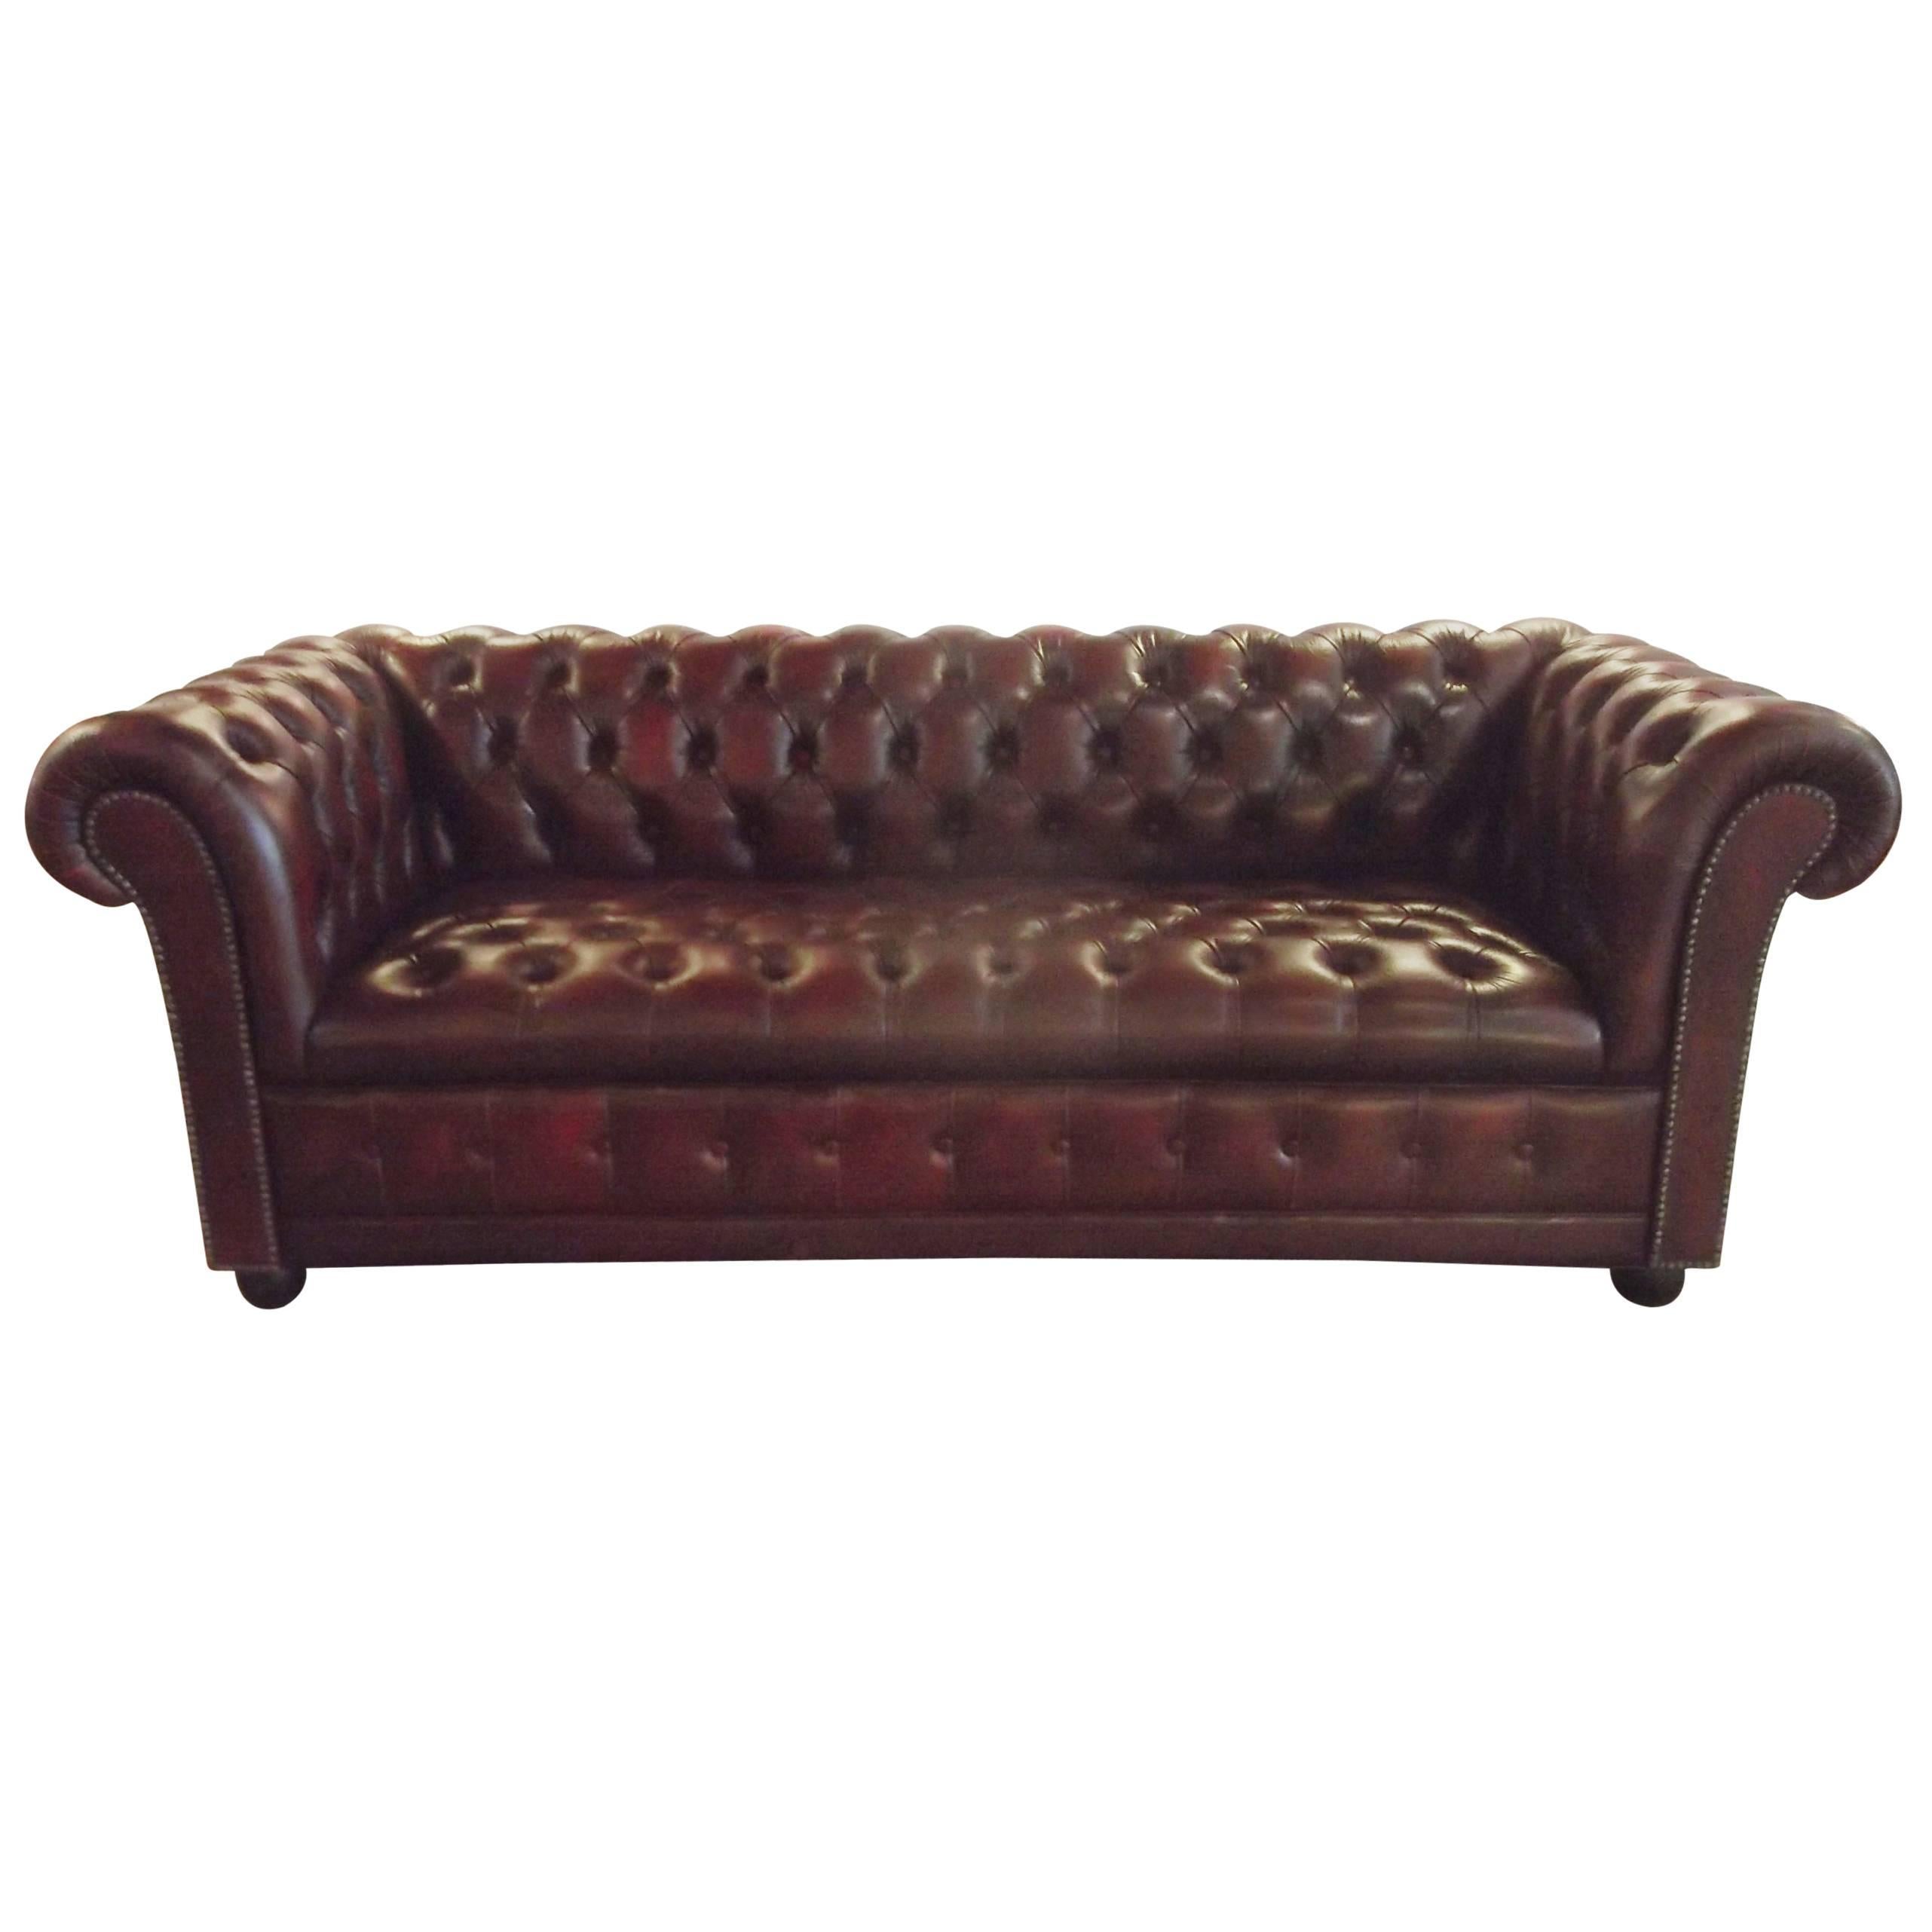 Classic English Chesterfield Sofa